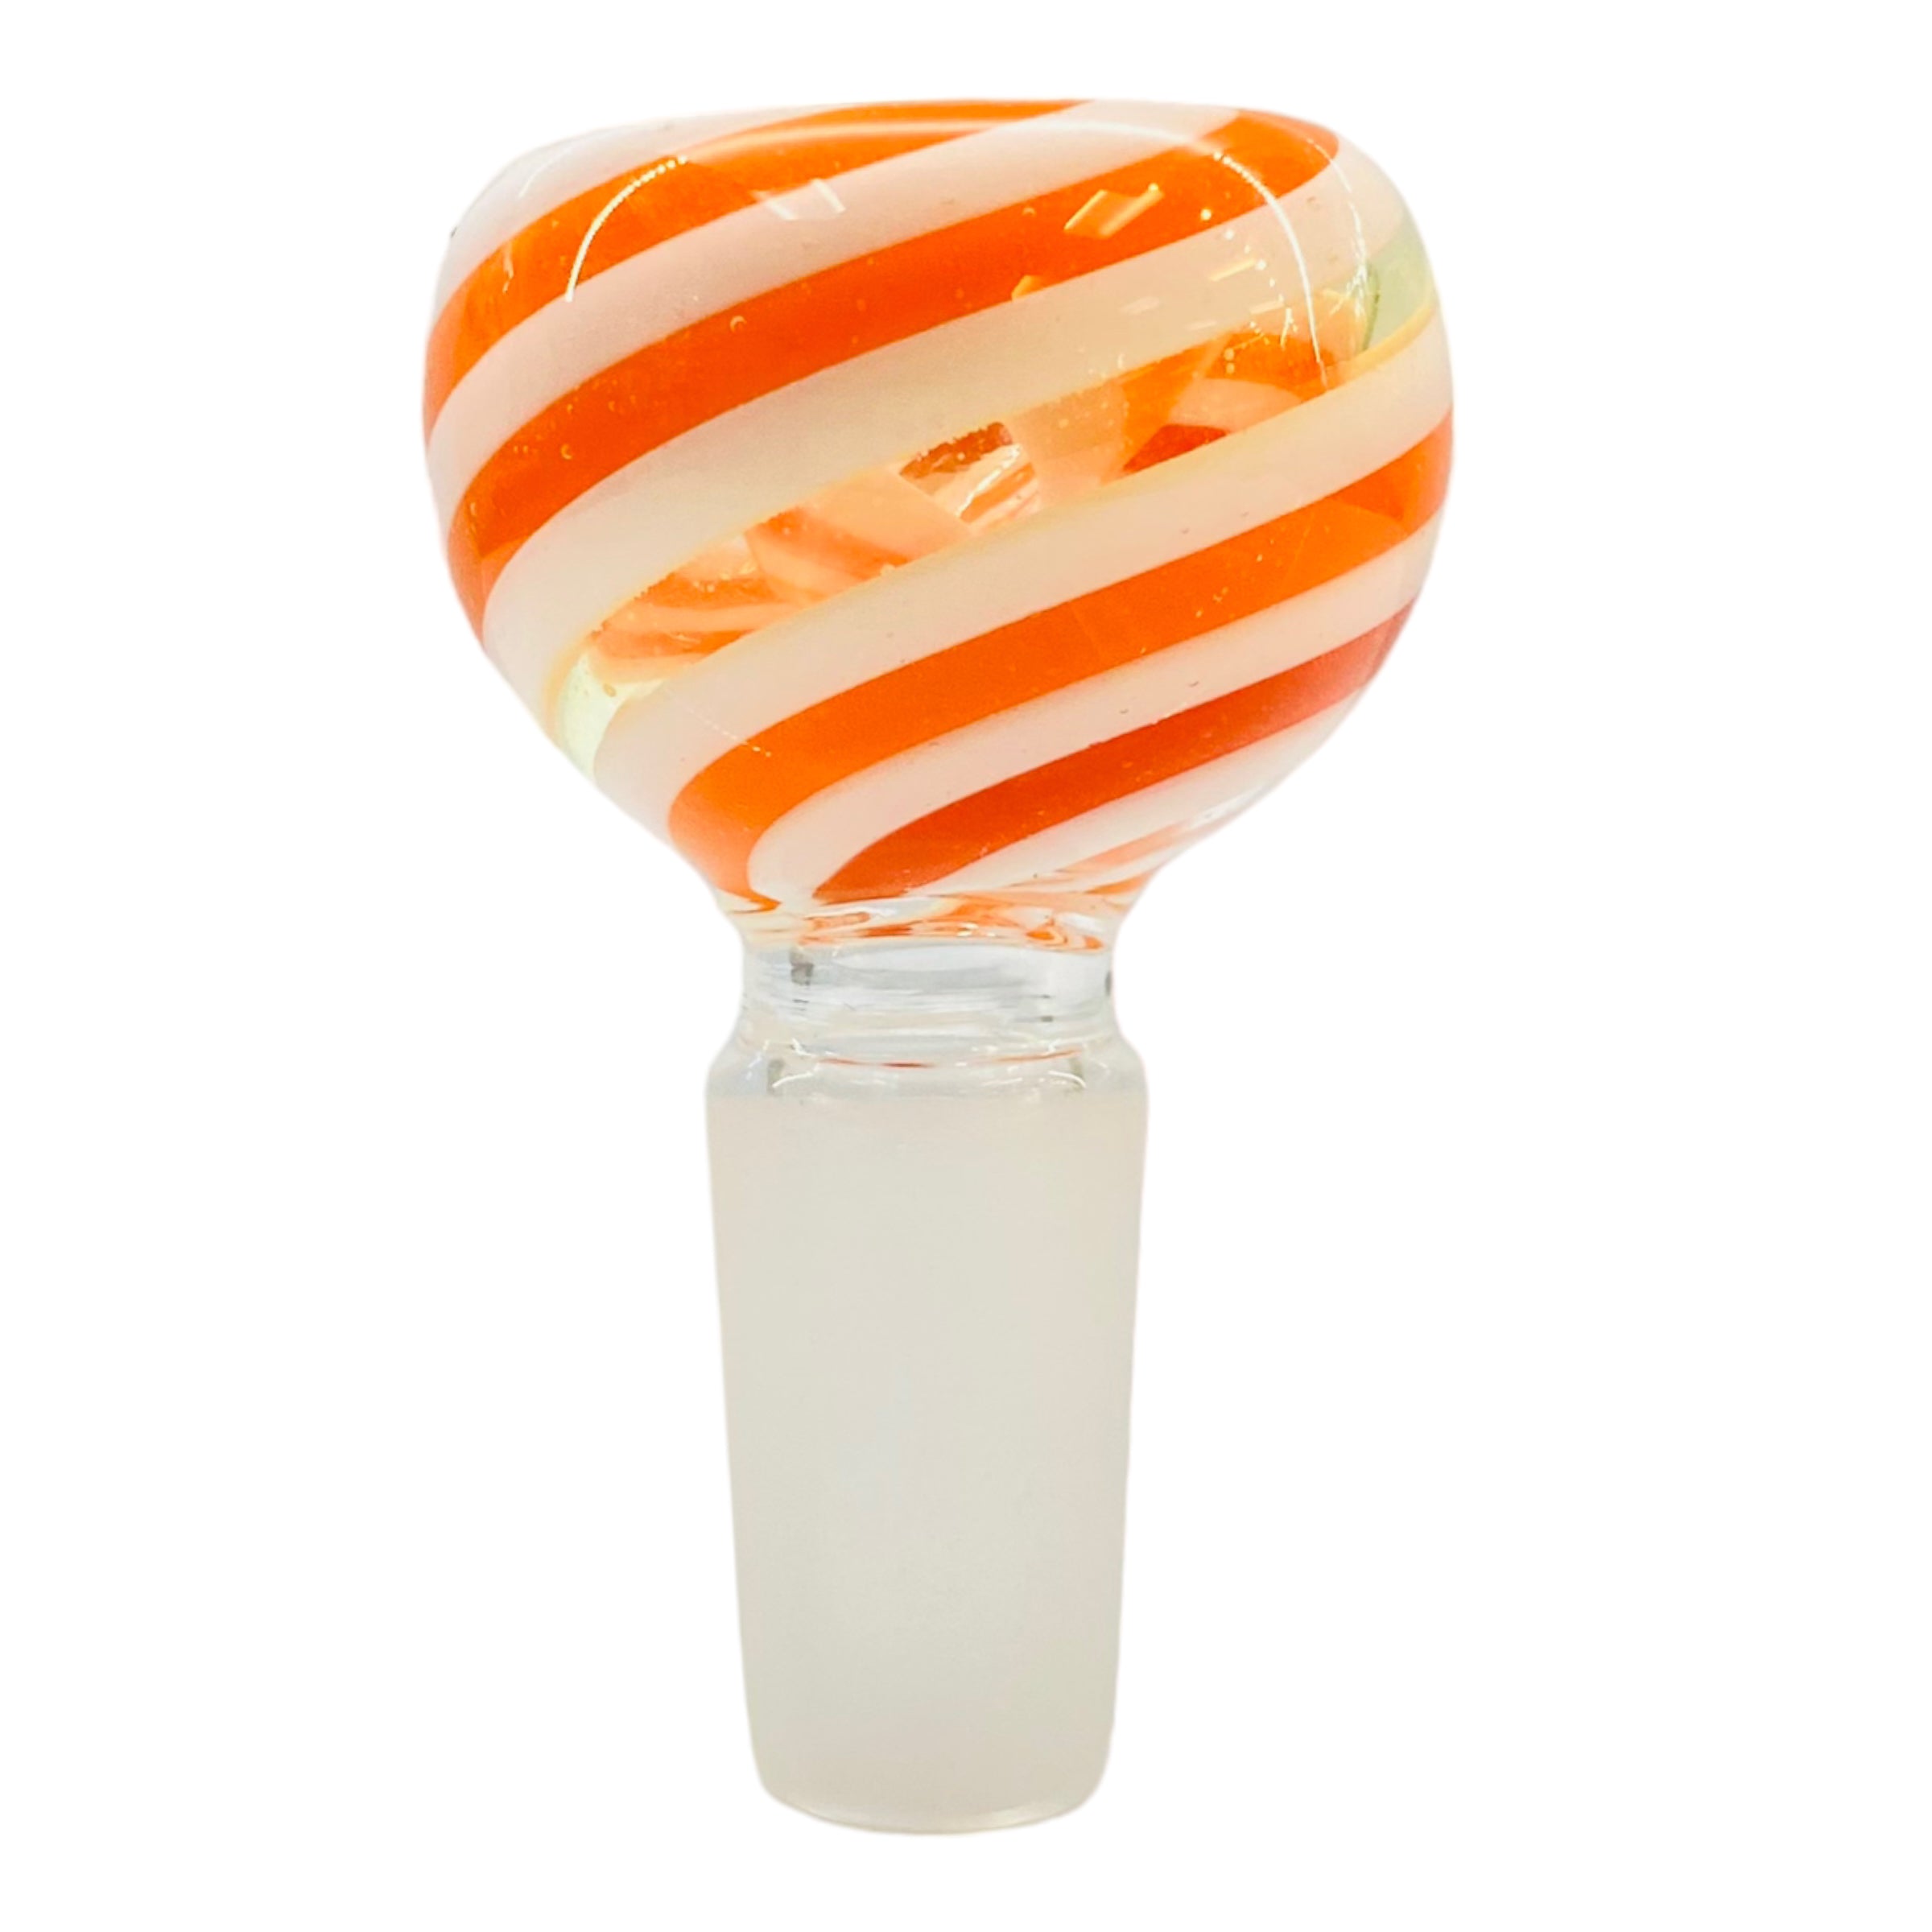 14mm Flower Bowl - Multi Color Bubble Twirl Bong Bowl Piece - Orange And White